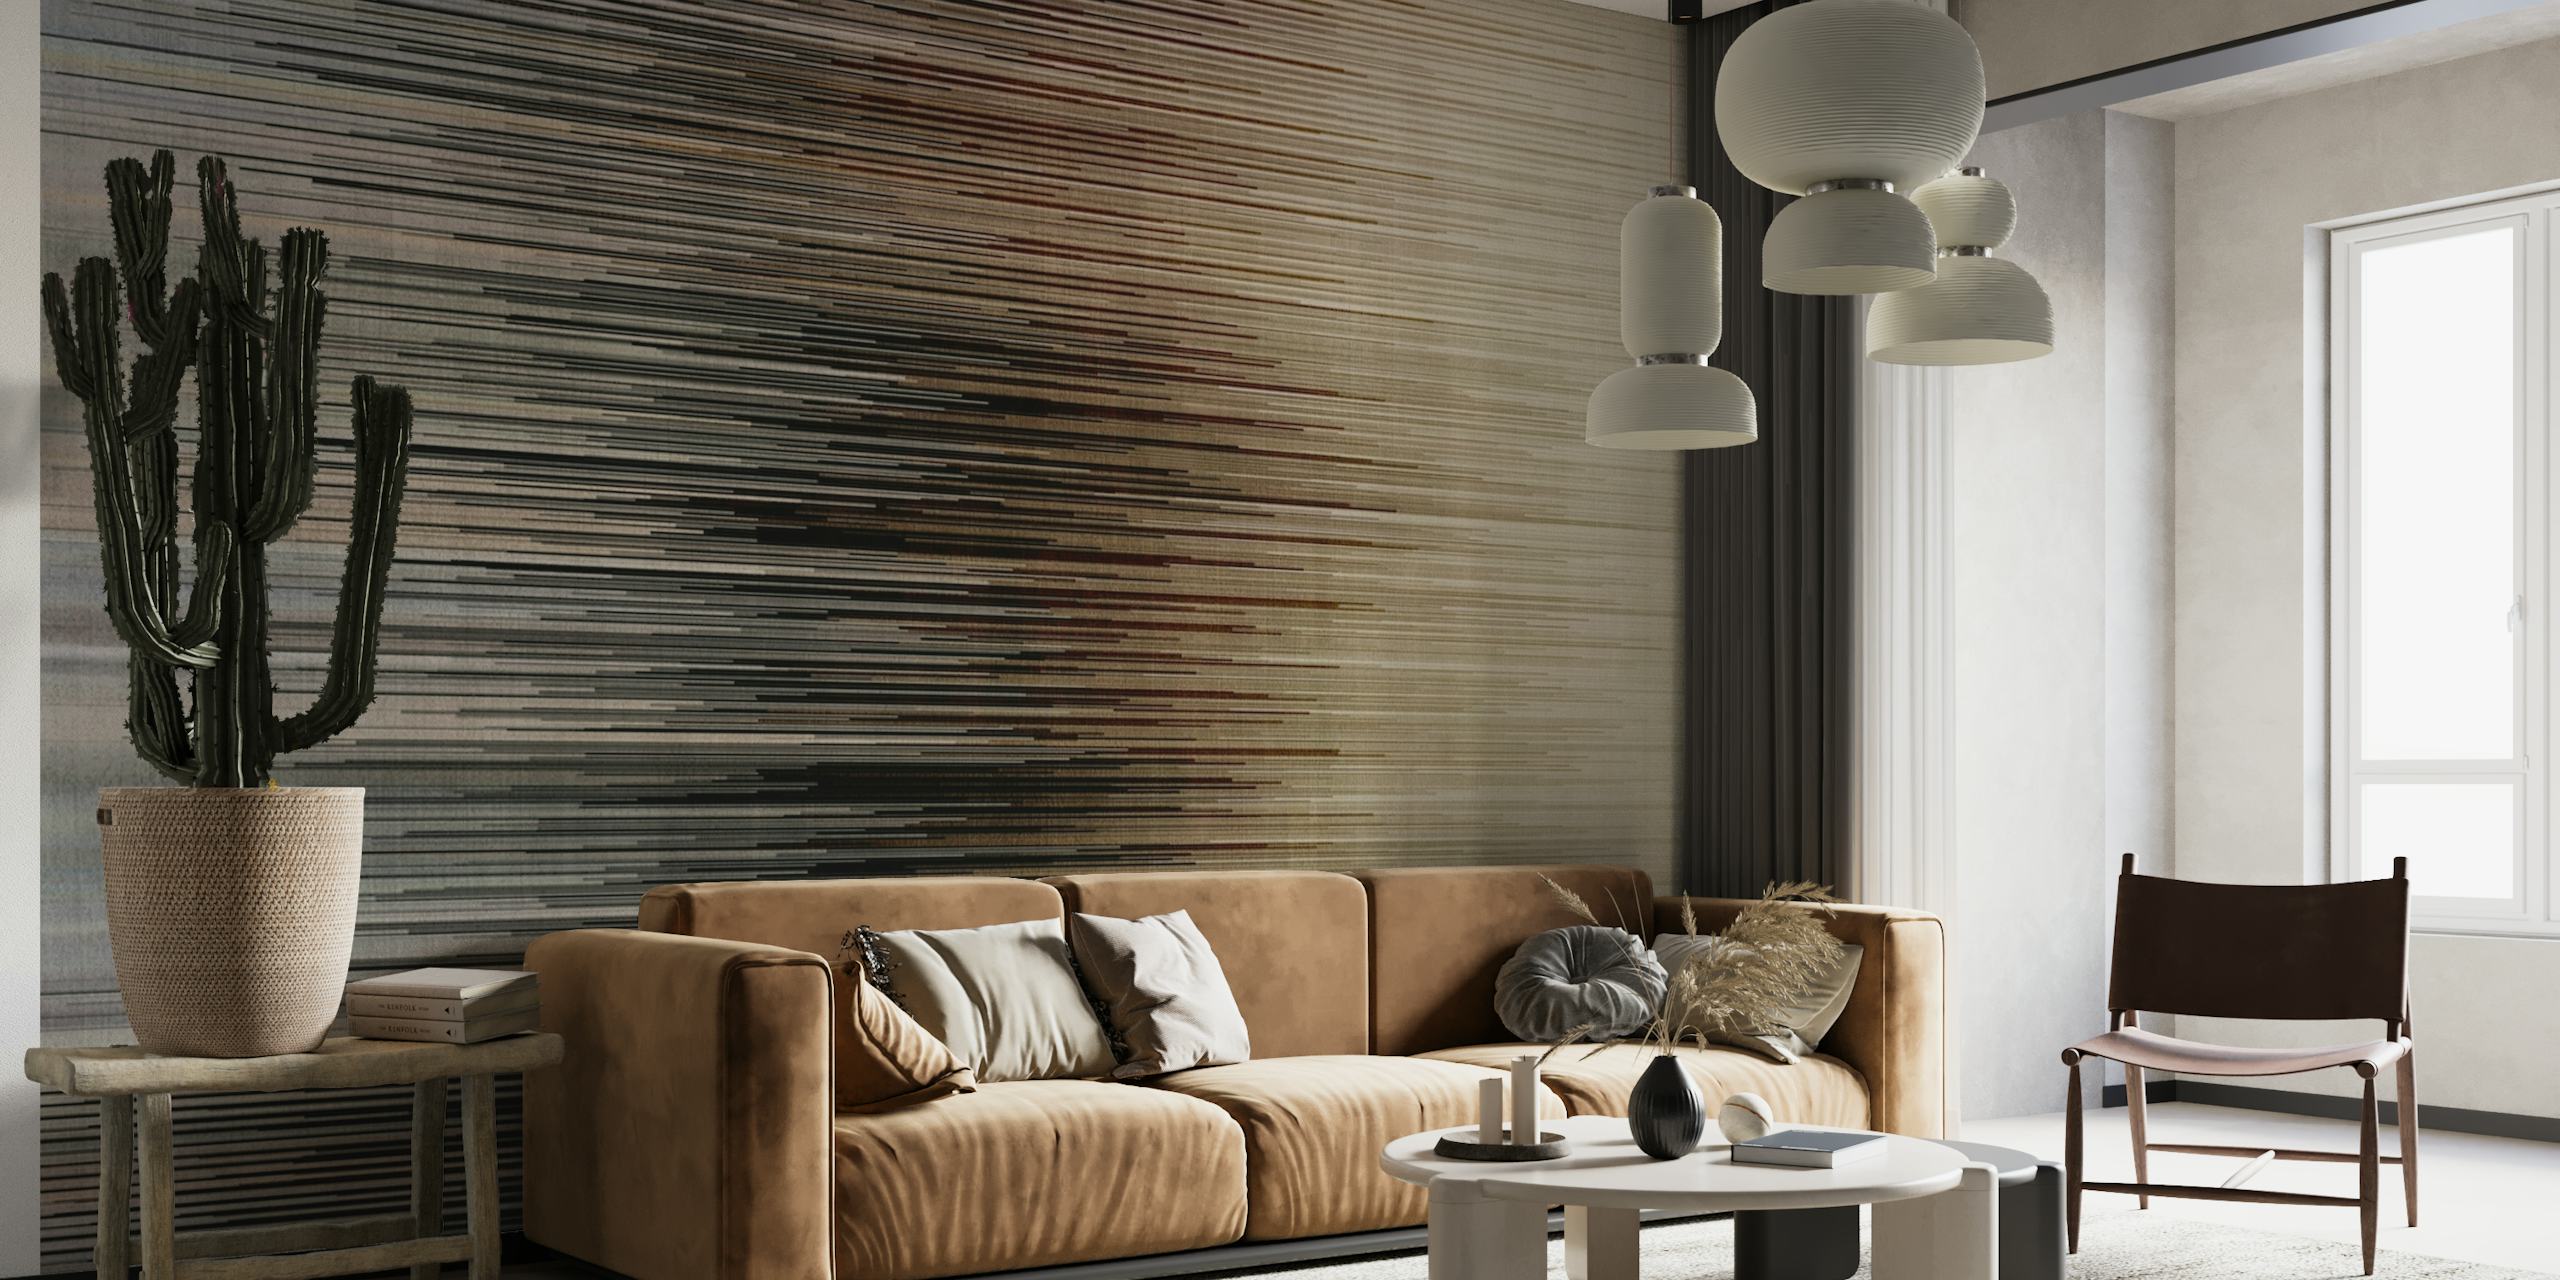 Fotomural de pared con patrón de líneas abstractas con líneas finas difuminadas y tonos neutros que crean textura.